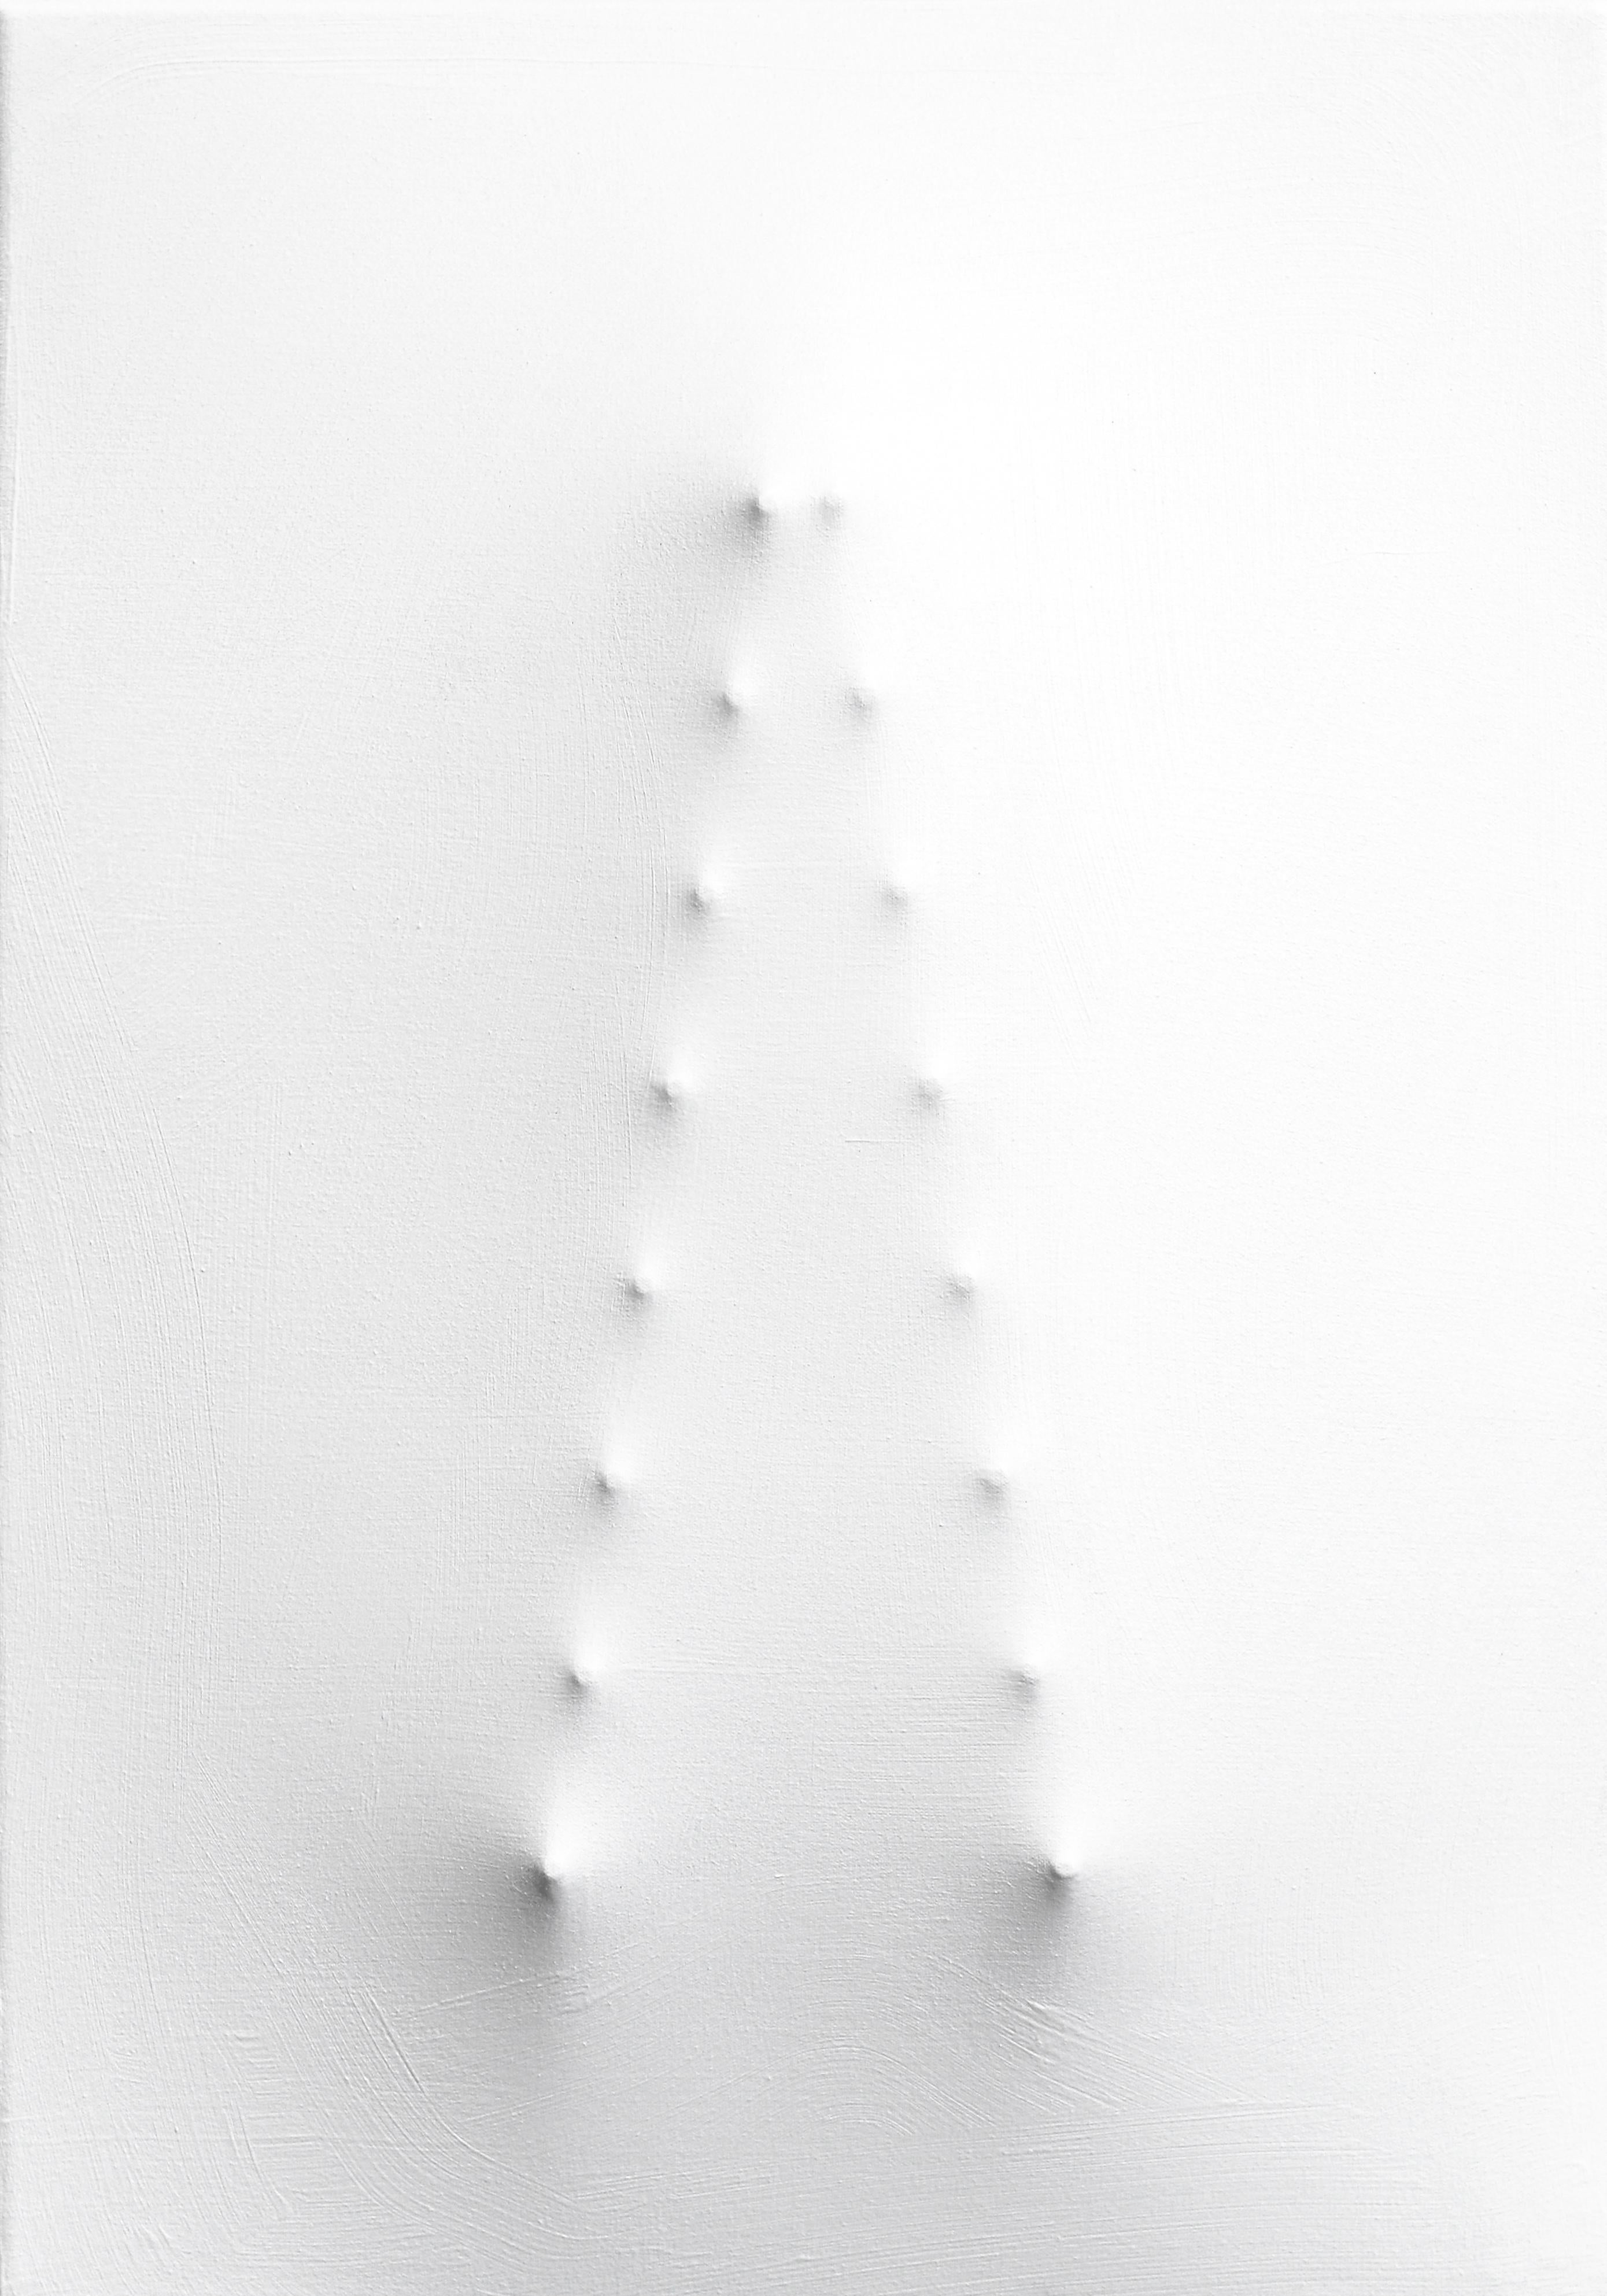 Ritual-Objekt Pause – Original Abstraktes minimalistisches skulpturales Kunstwerk – Mixed Media Art von Len Klikunas